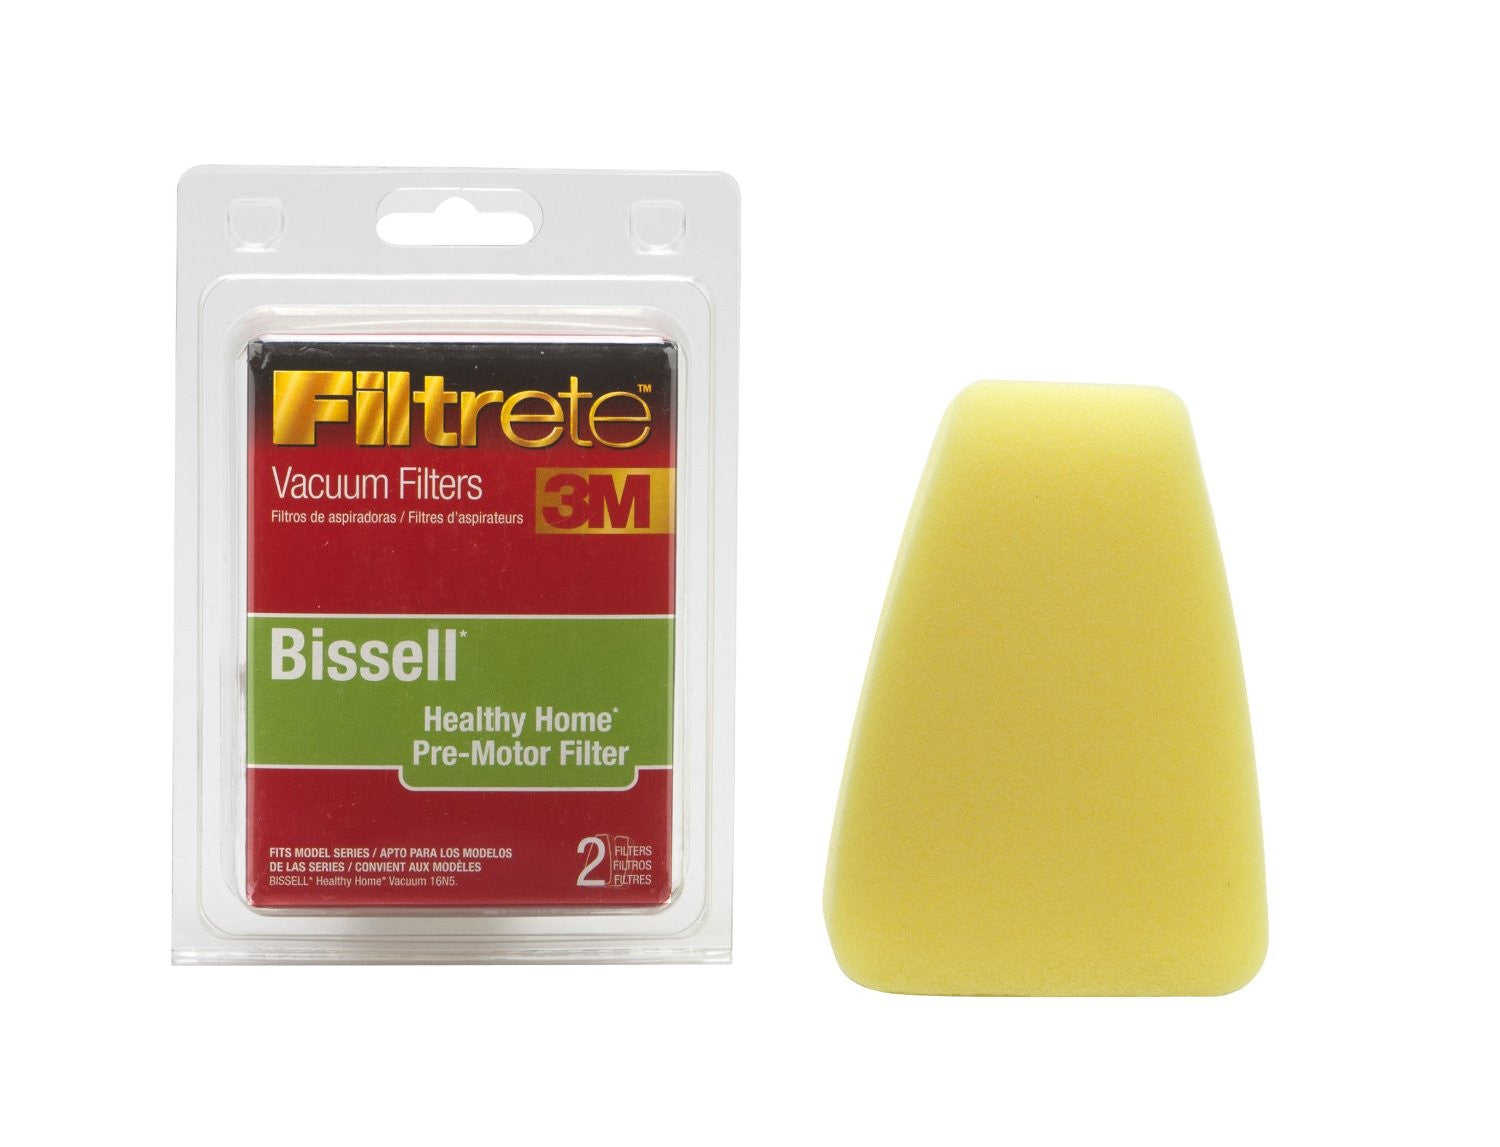 3M Filtrete Bissell Healthy Home PreMotor Allergen Vacuum Filter, 2 Pack